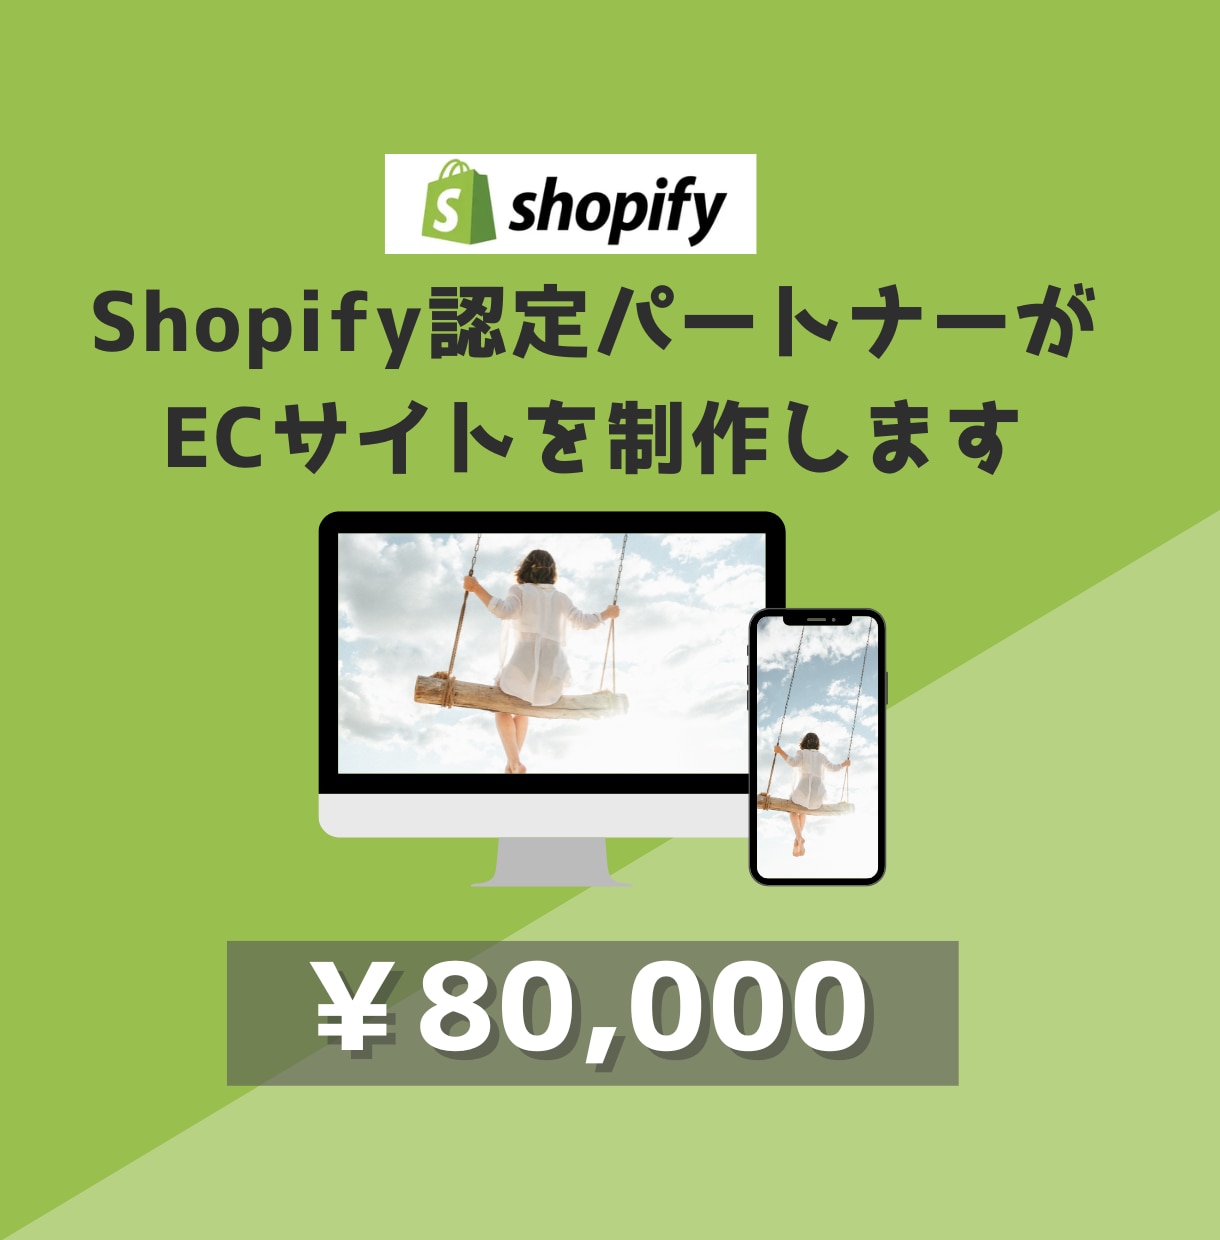 ShopifyのプロがECサイトを作ります 現役運用者が売れるECサイトを作成します！ イメージ1